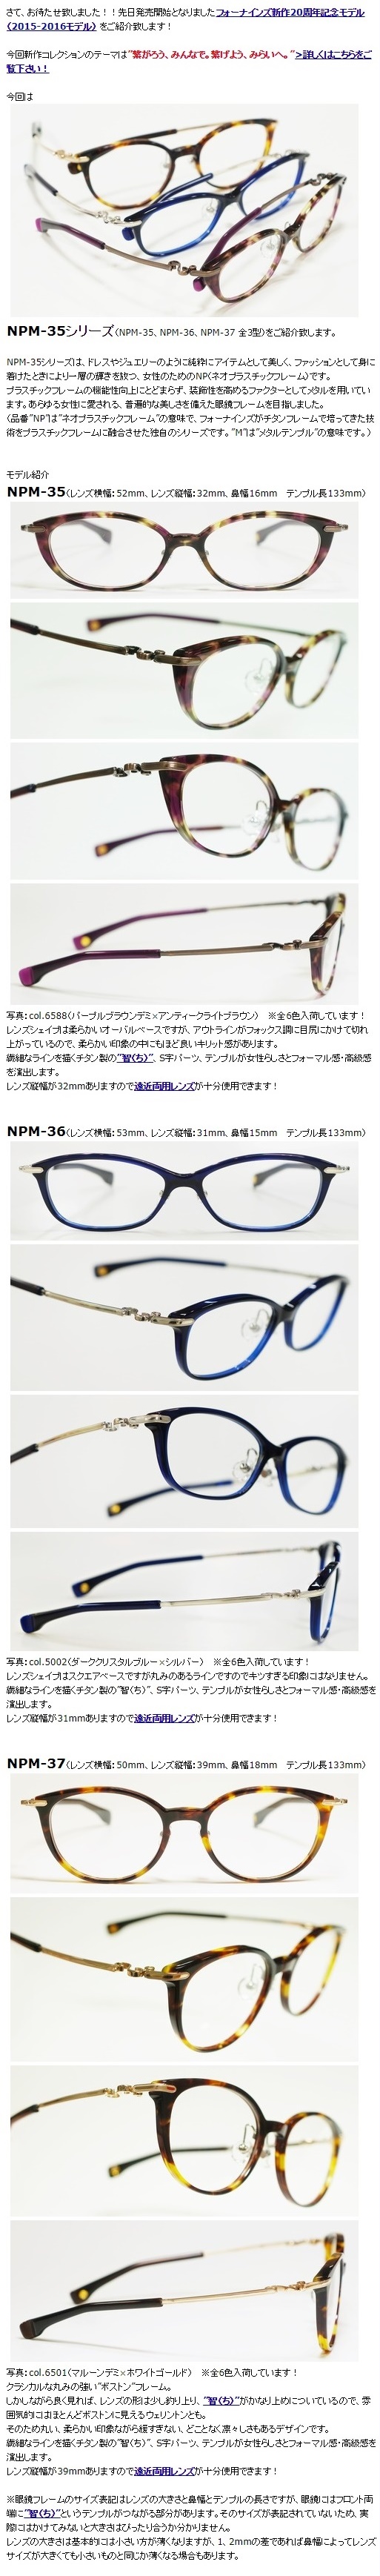 999.9”NPM-35シリーズ”】 | 999.9 selected by HAYASHI-MEGANE BLOG(2)